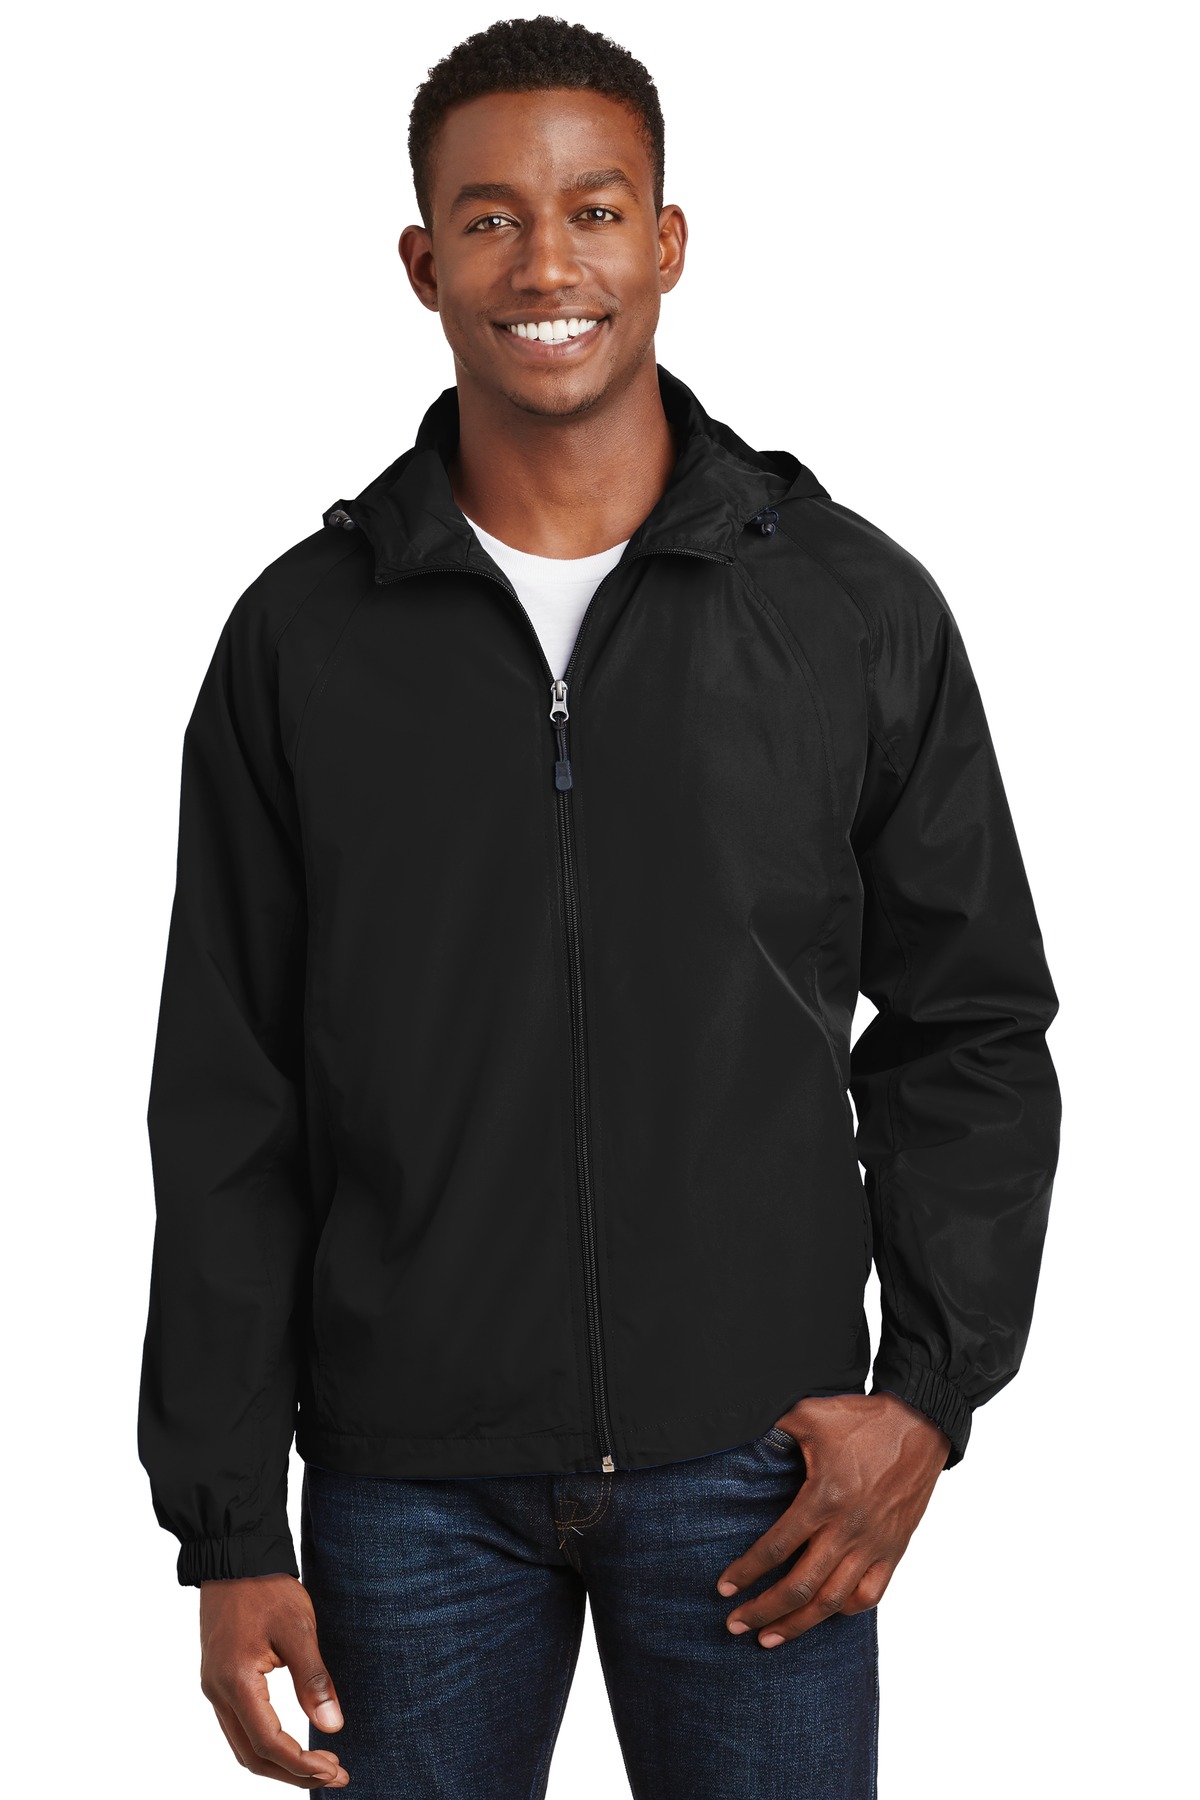 Sport-Tek Hospitality Activewear & Outerwear ® Hooded Raglan Jacket.-Sport-Tek